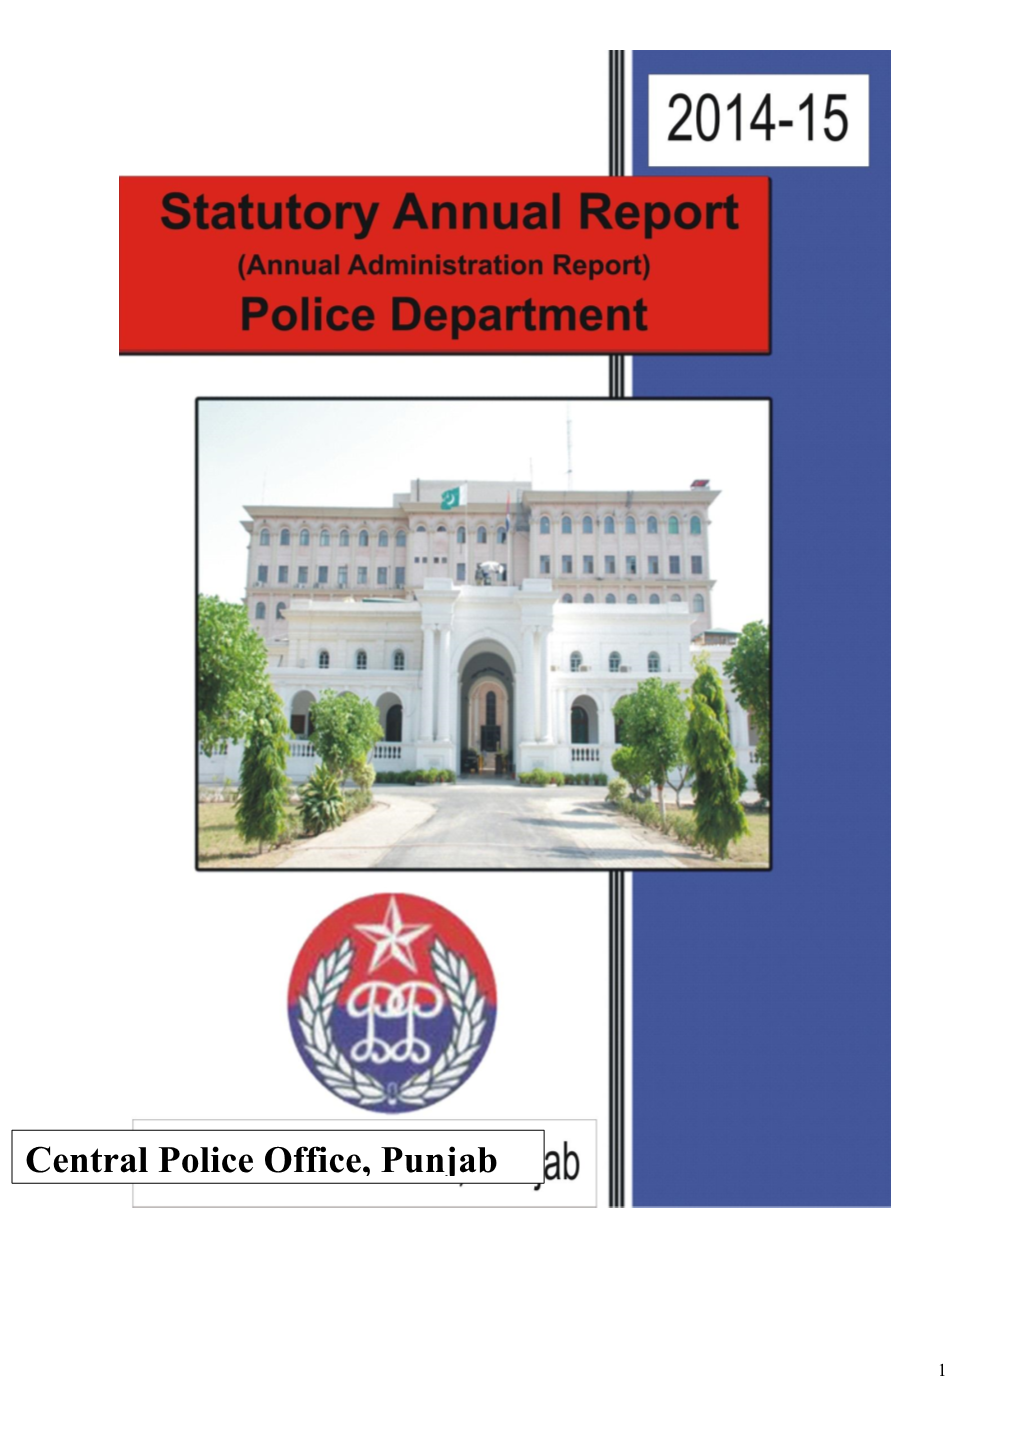 Central Police Office, Punjab